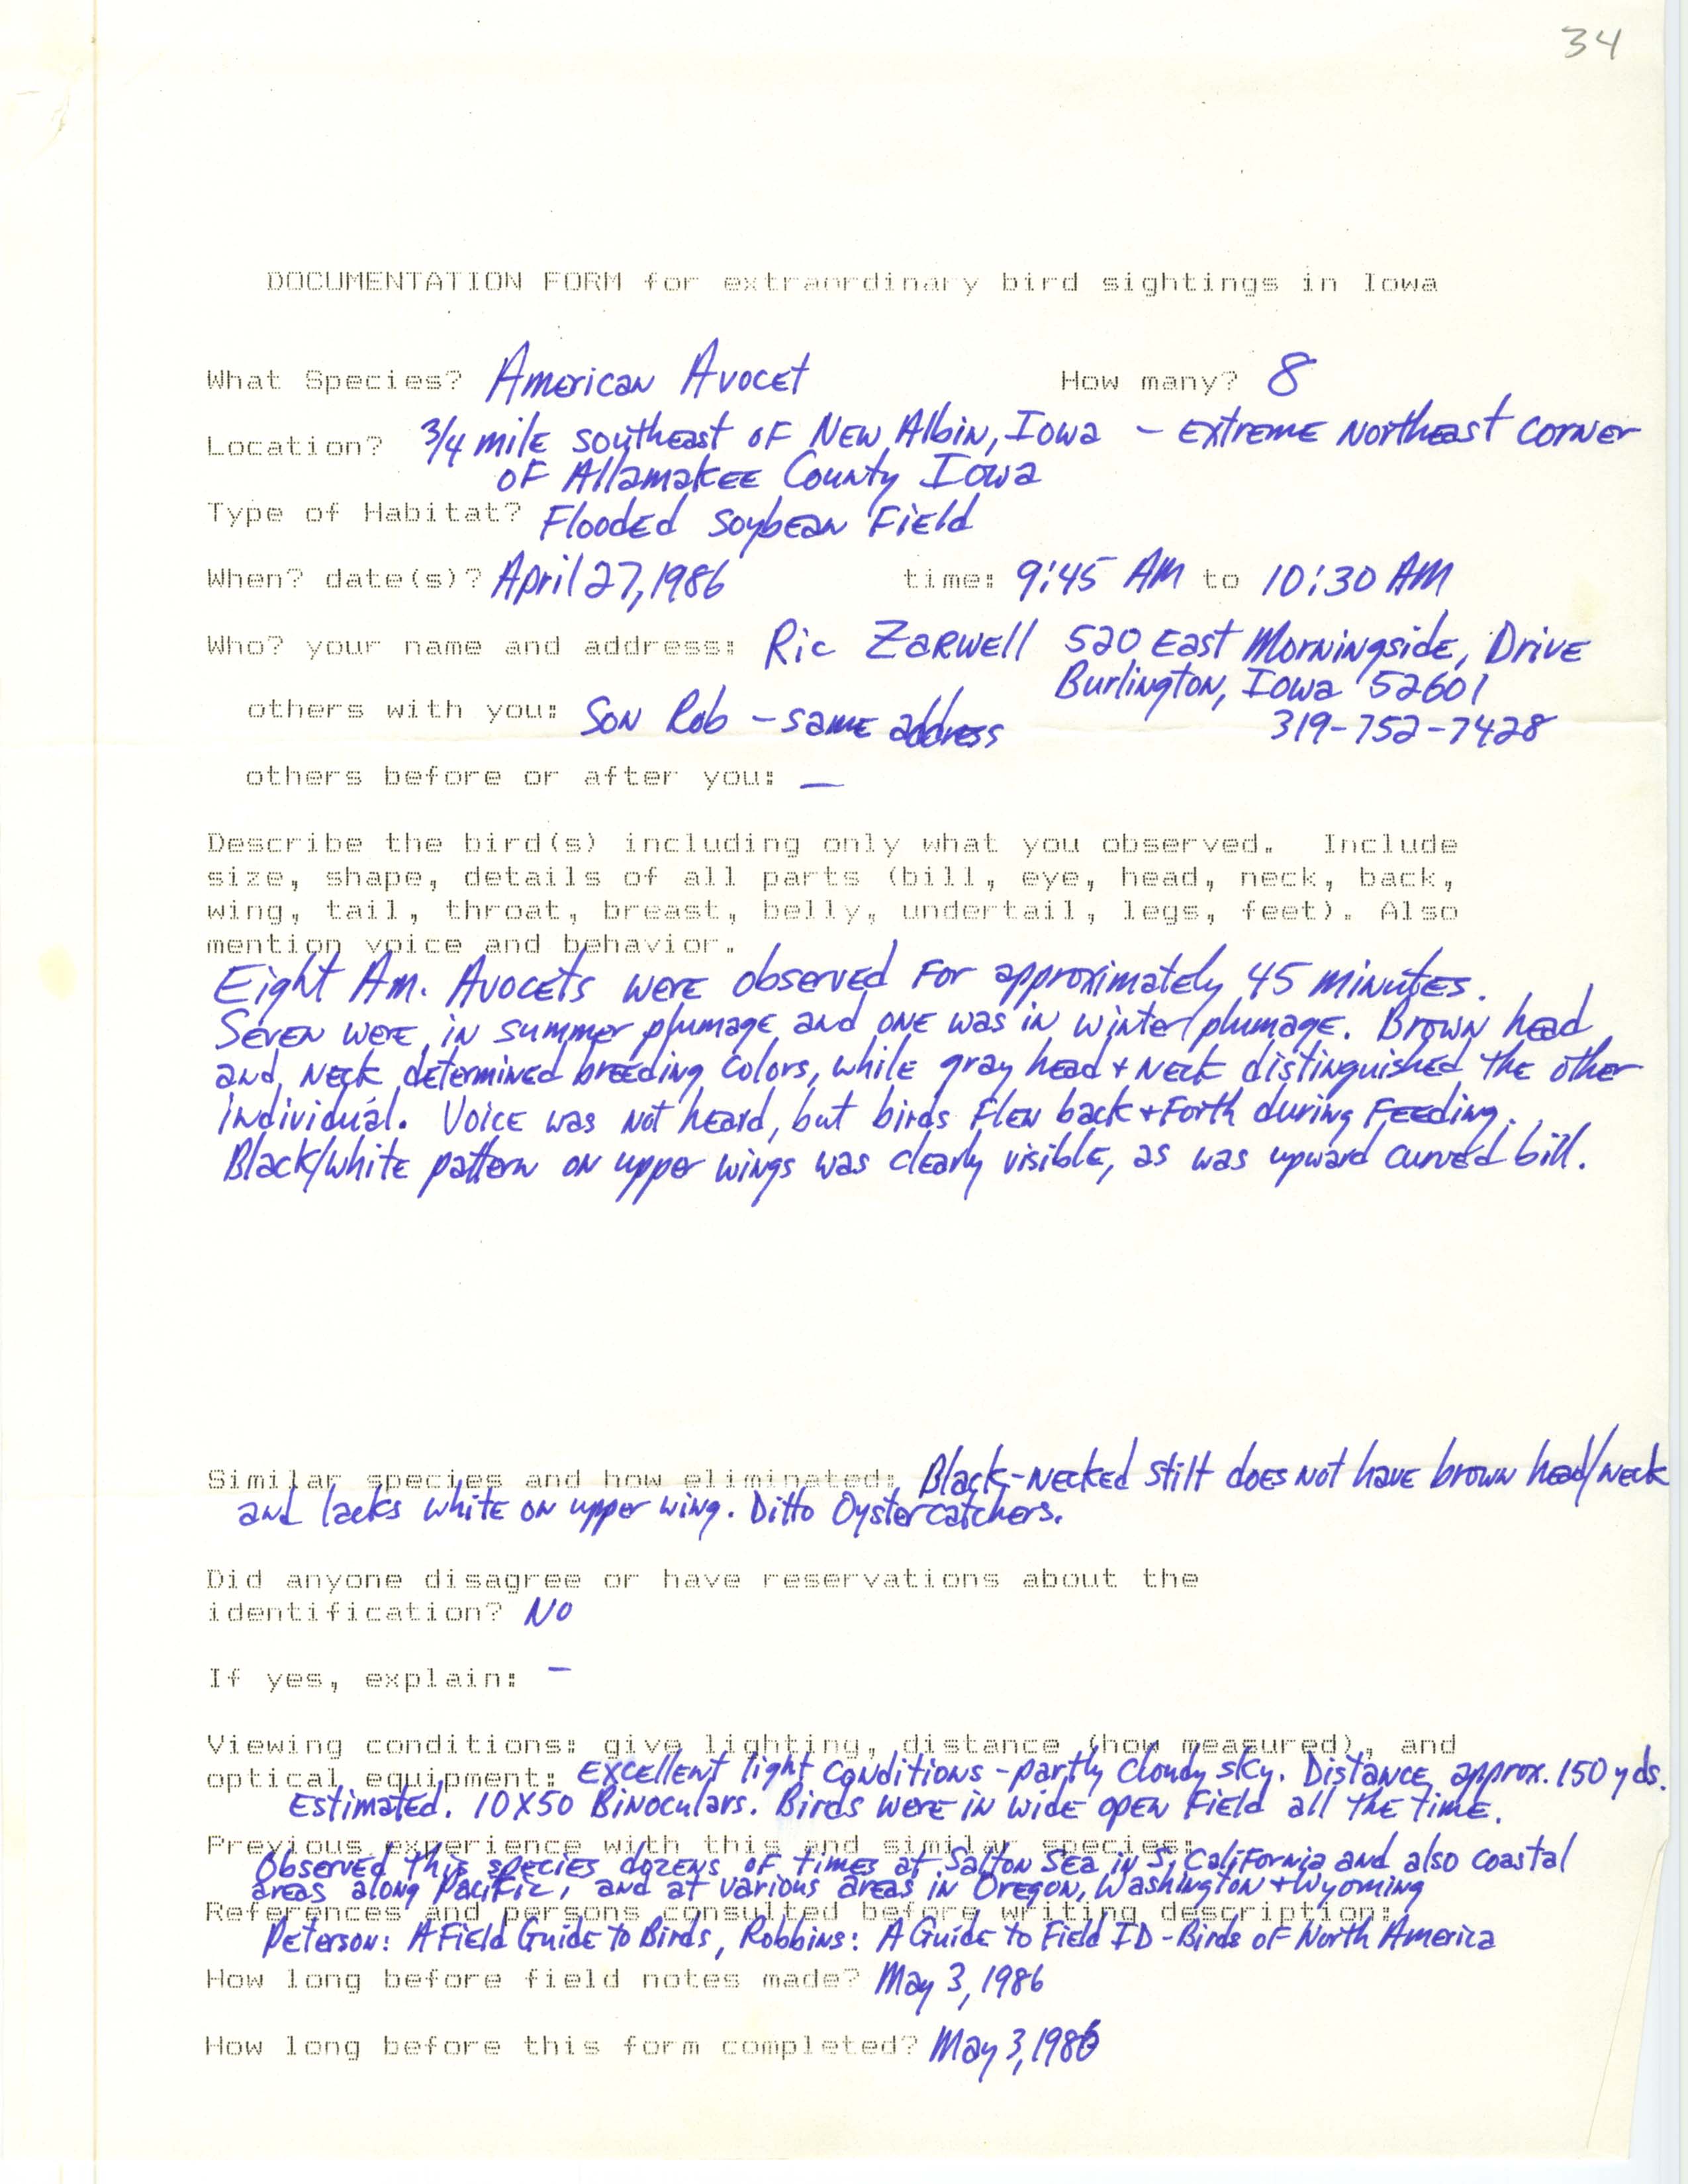 Rare bird documentation form for American Avocet southeast of New Albin, 1986